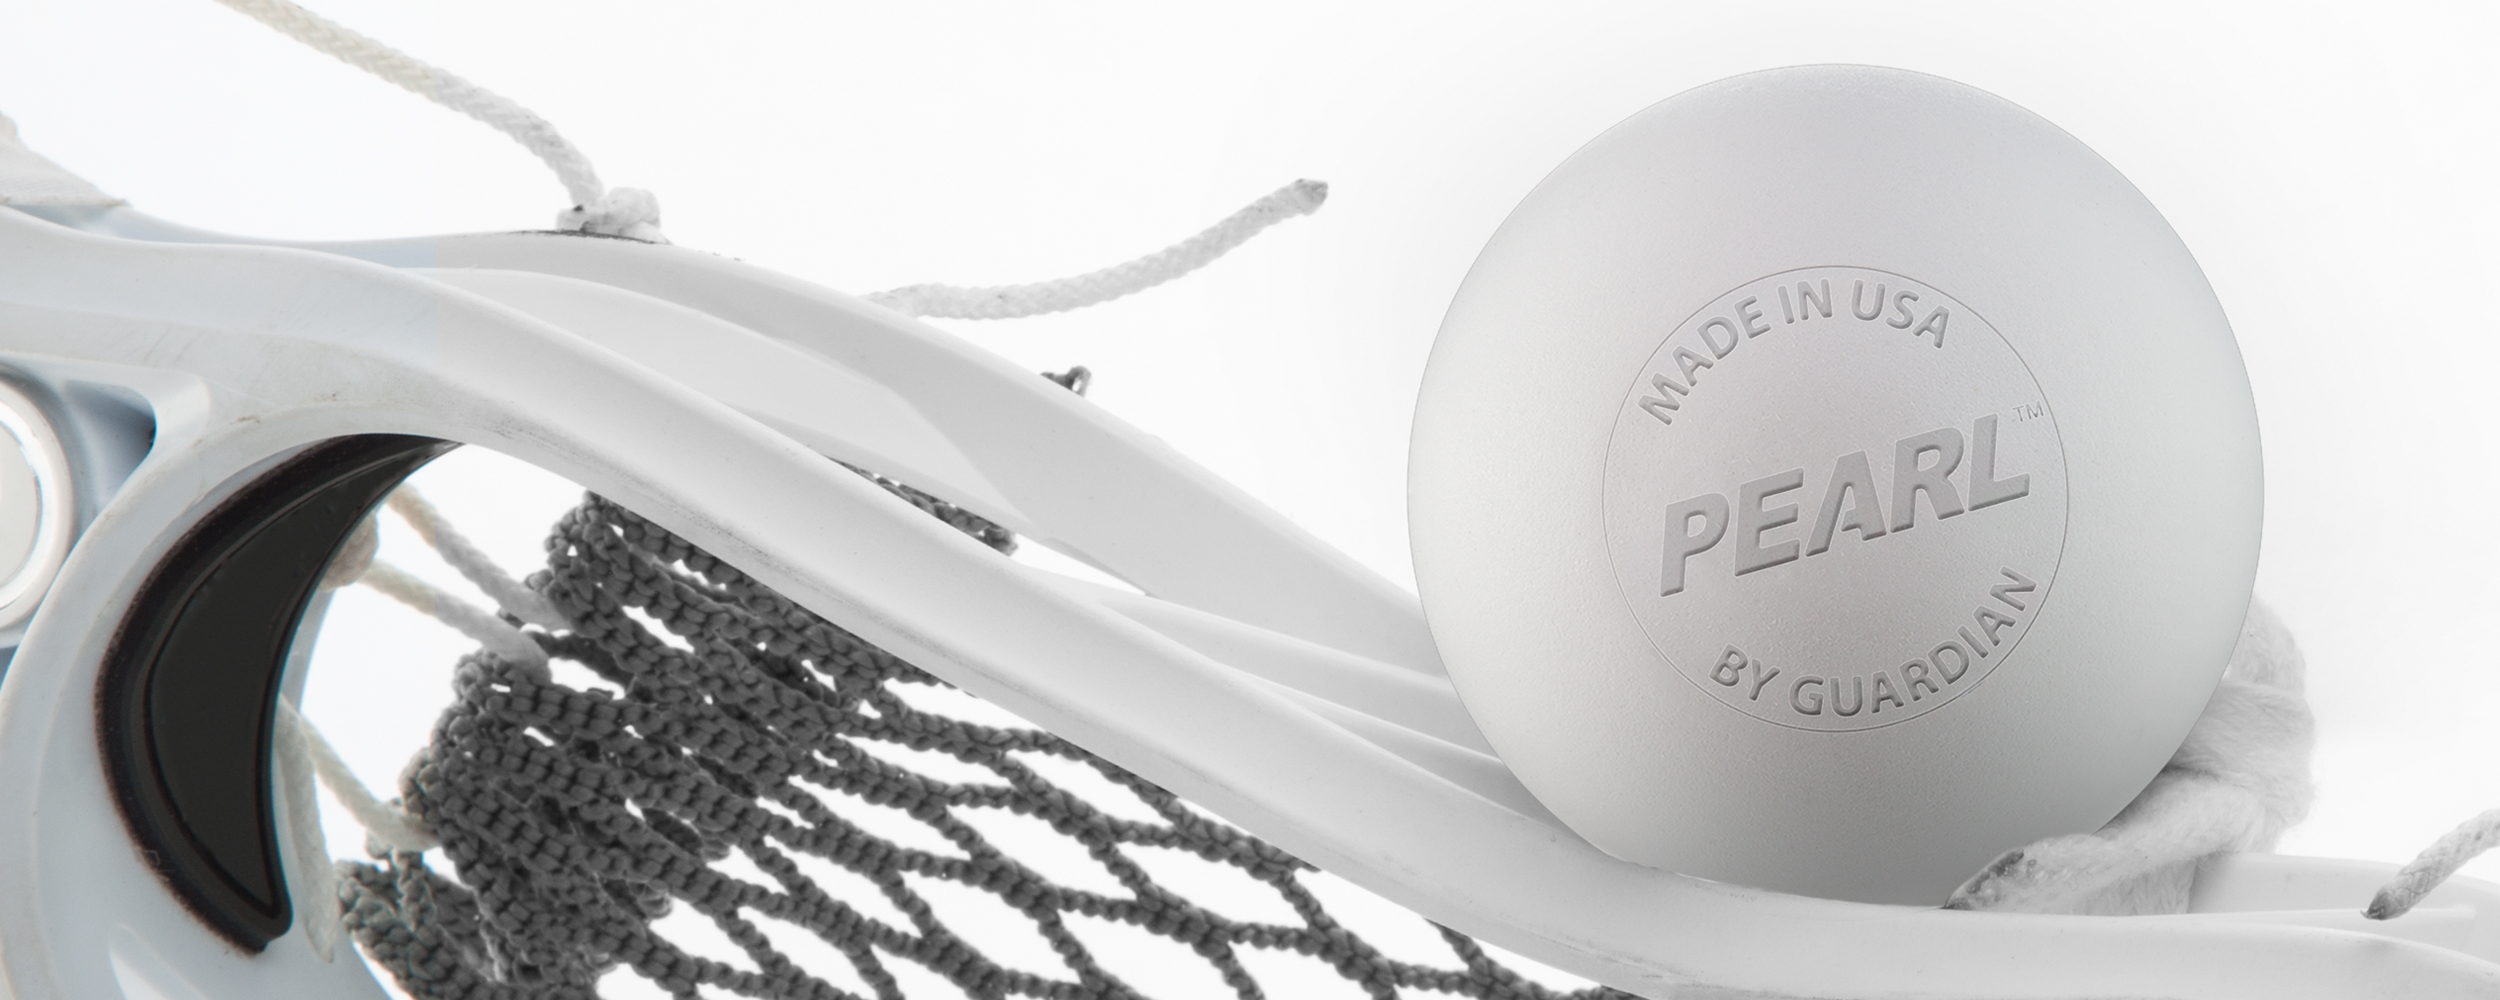 Pearl lacrosse ball